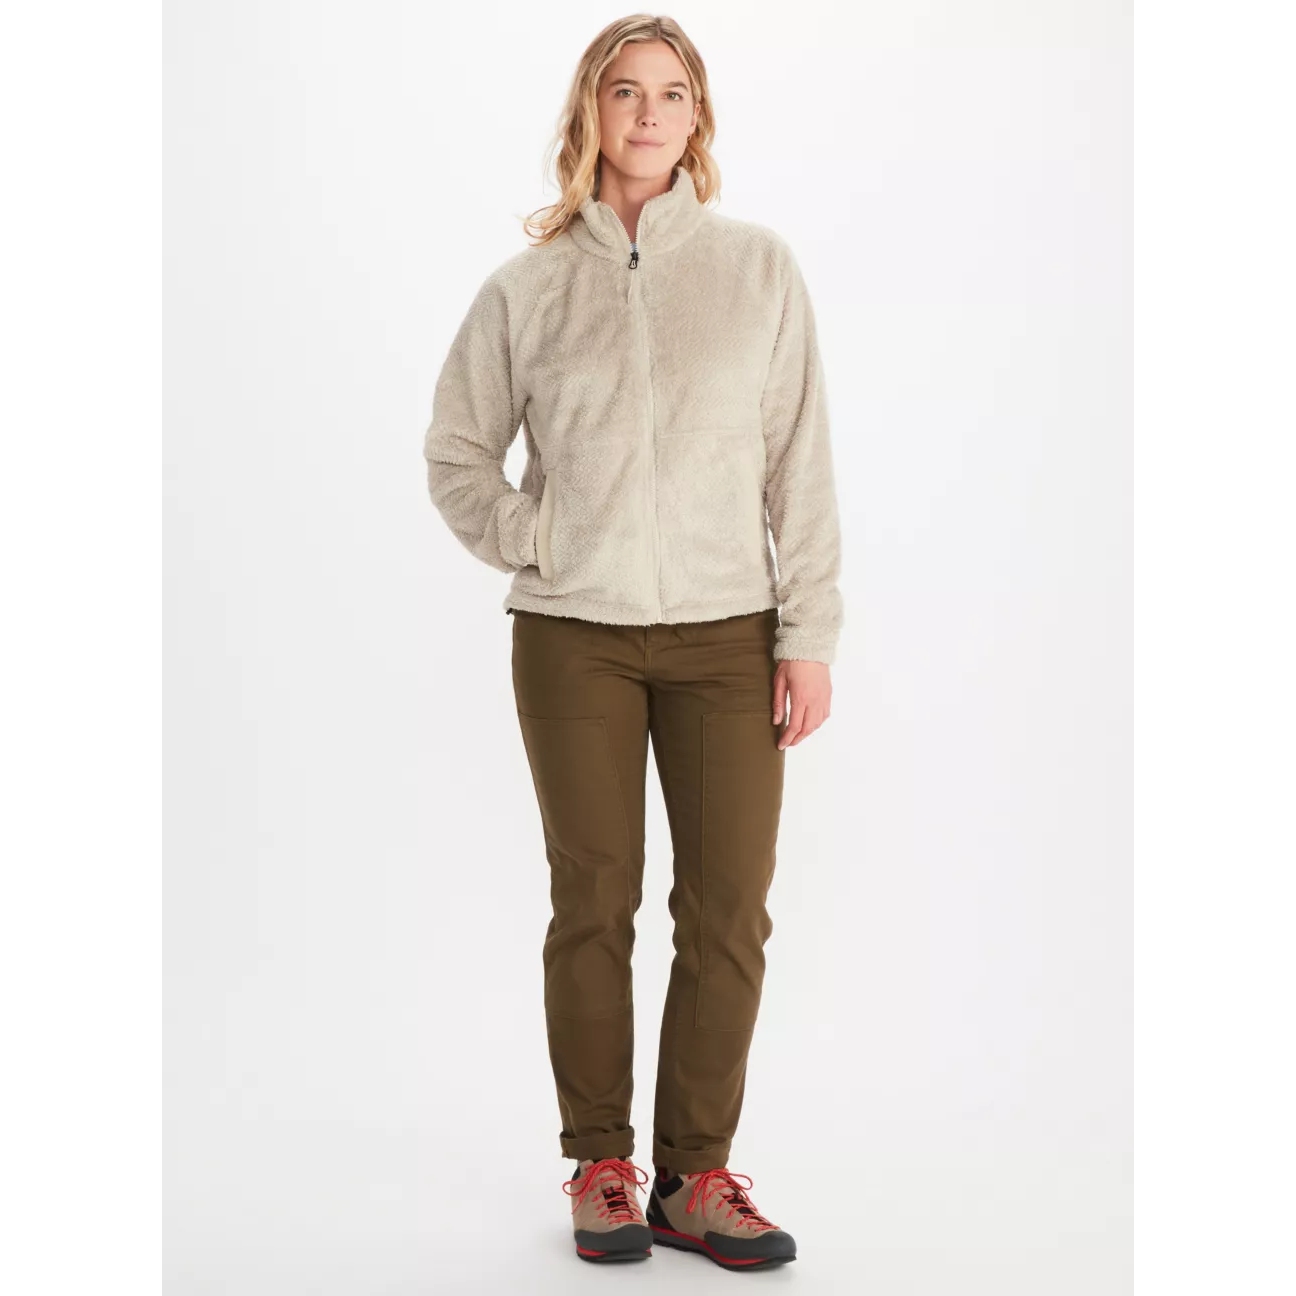 Marmot Wiley Polartec Fleece Jacket - Women's